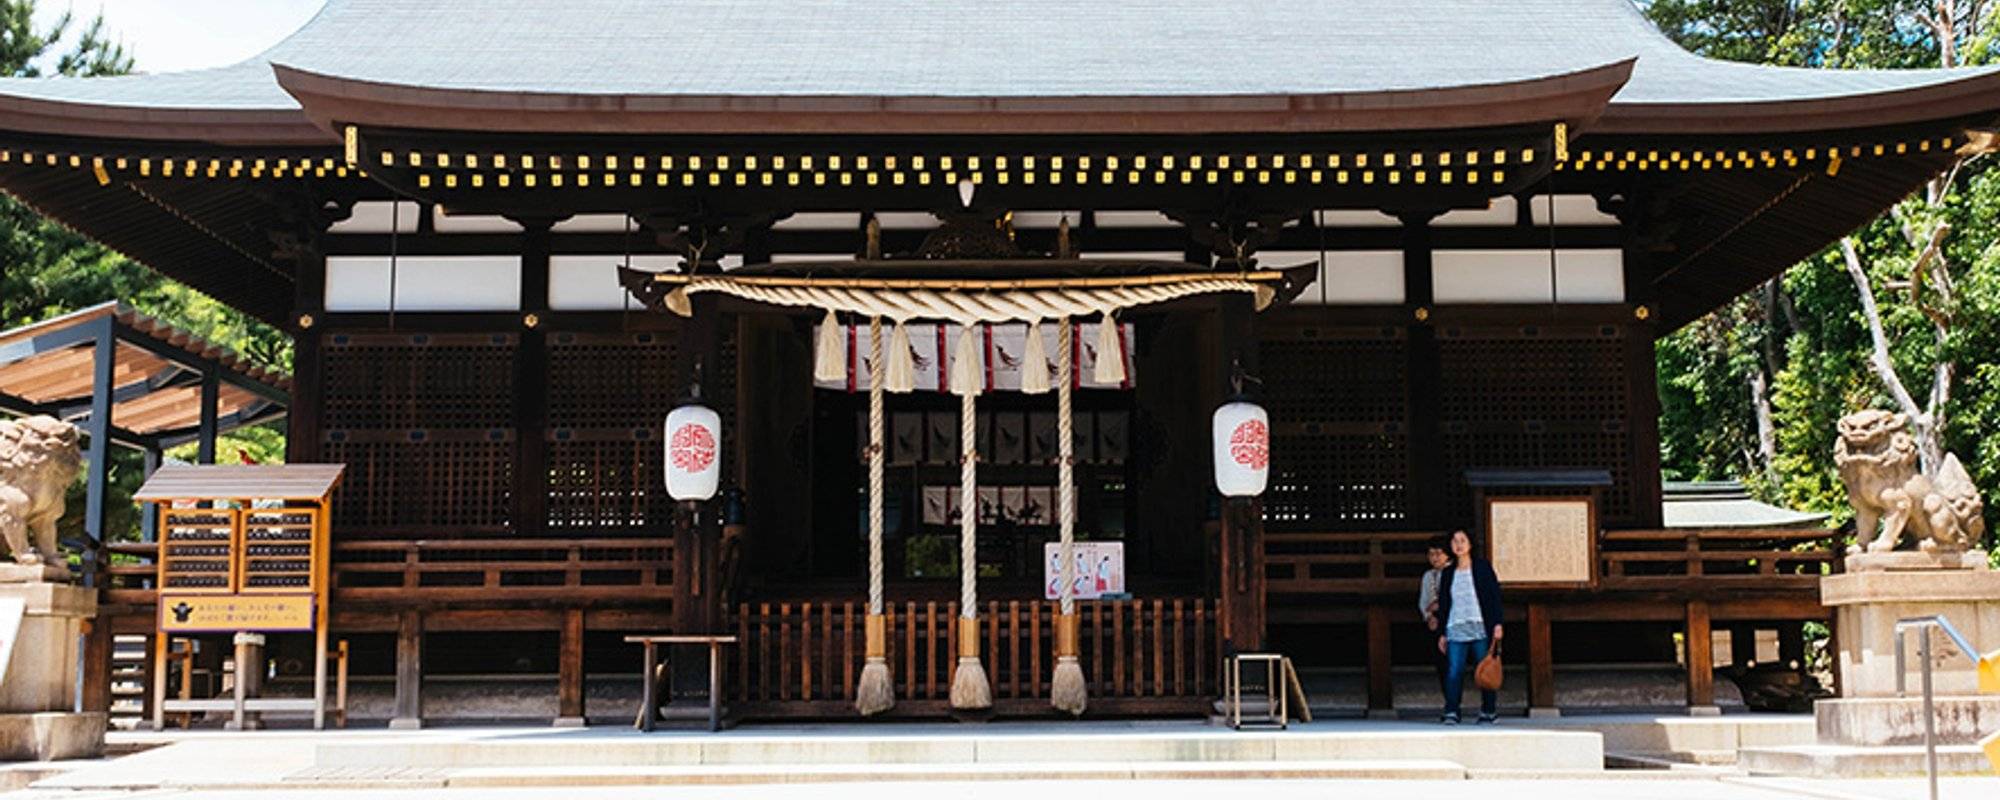 Exploring Japan - Yuzuruha Shrine in Kobe